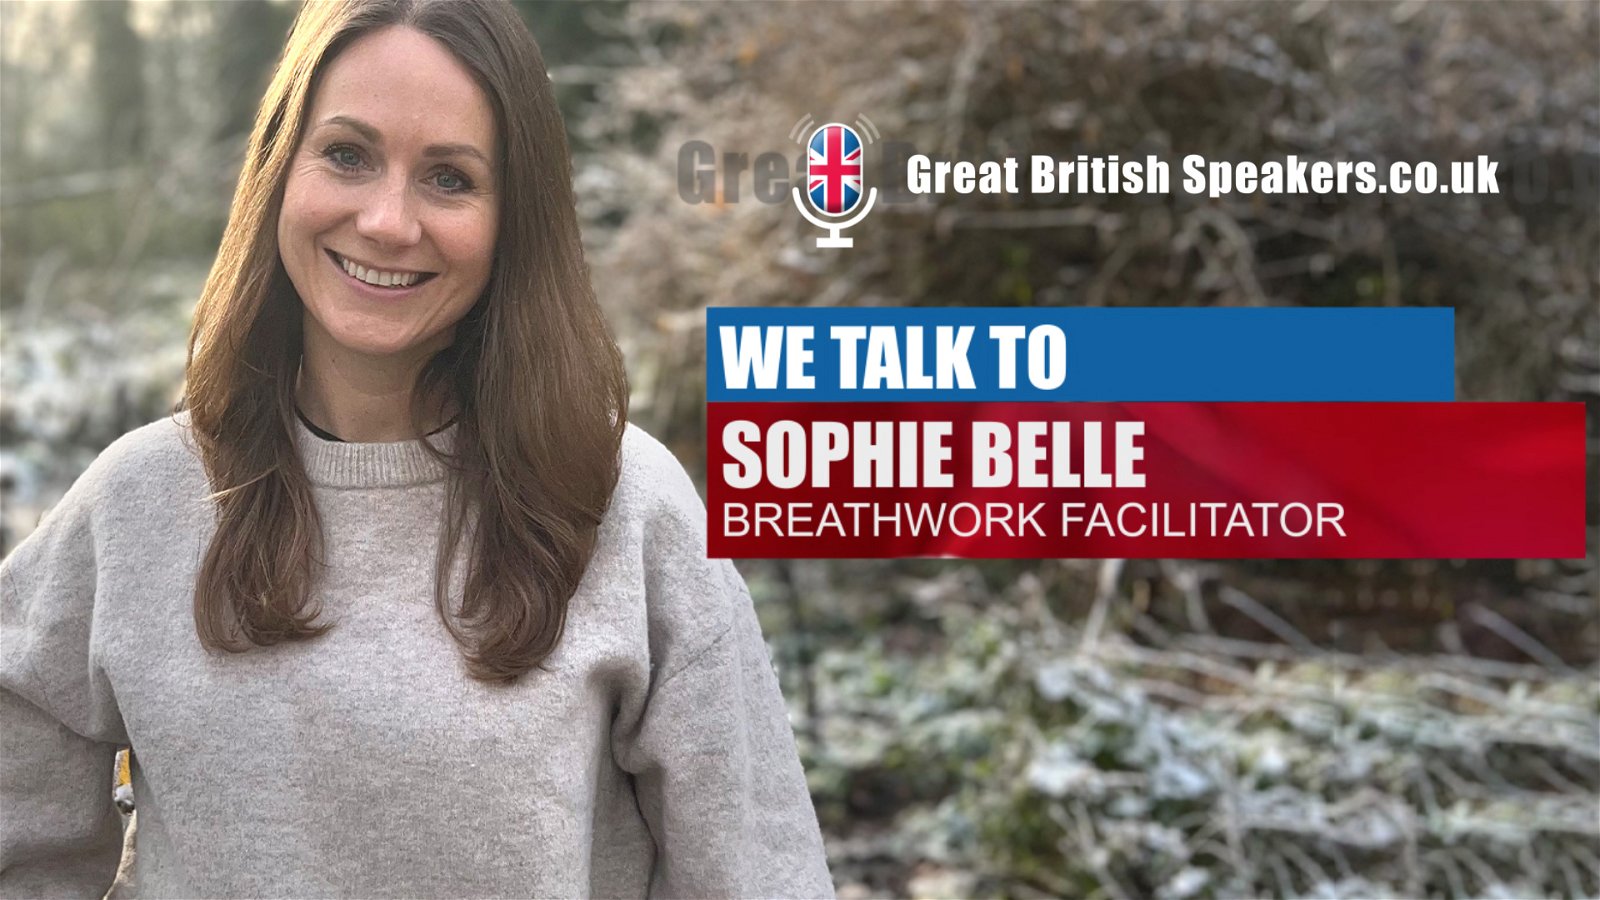 Sophie Belle, breathwork speaker at Great British Speakers